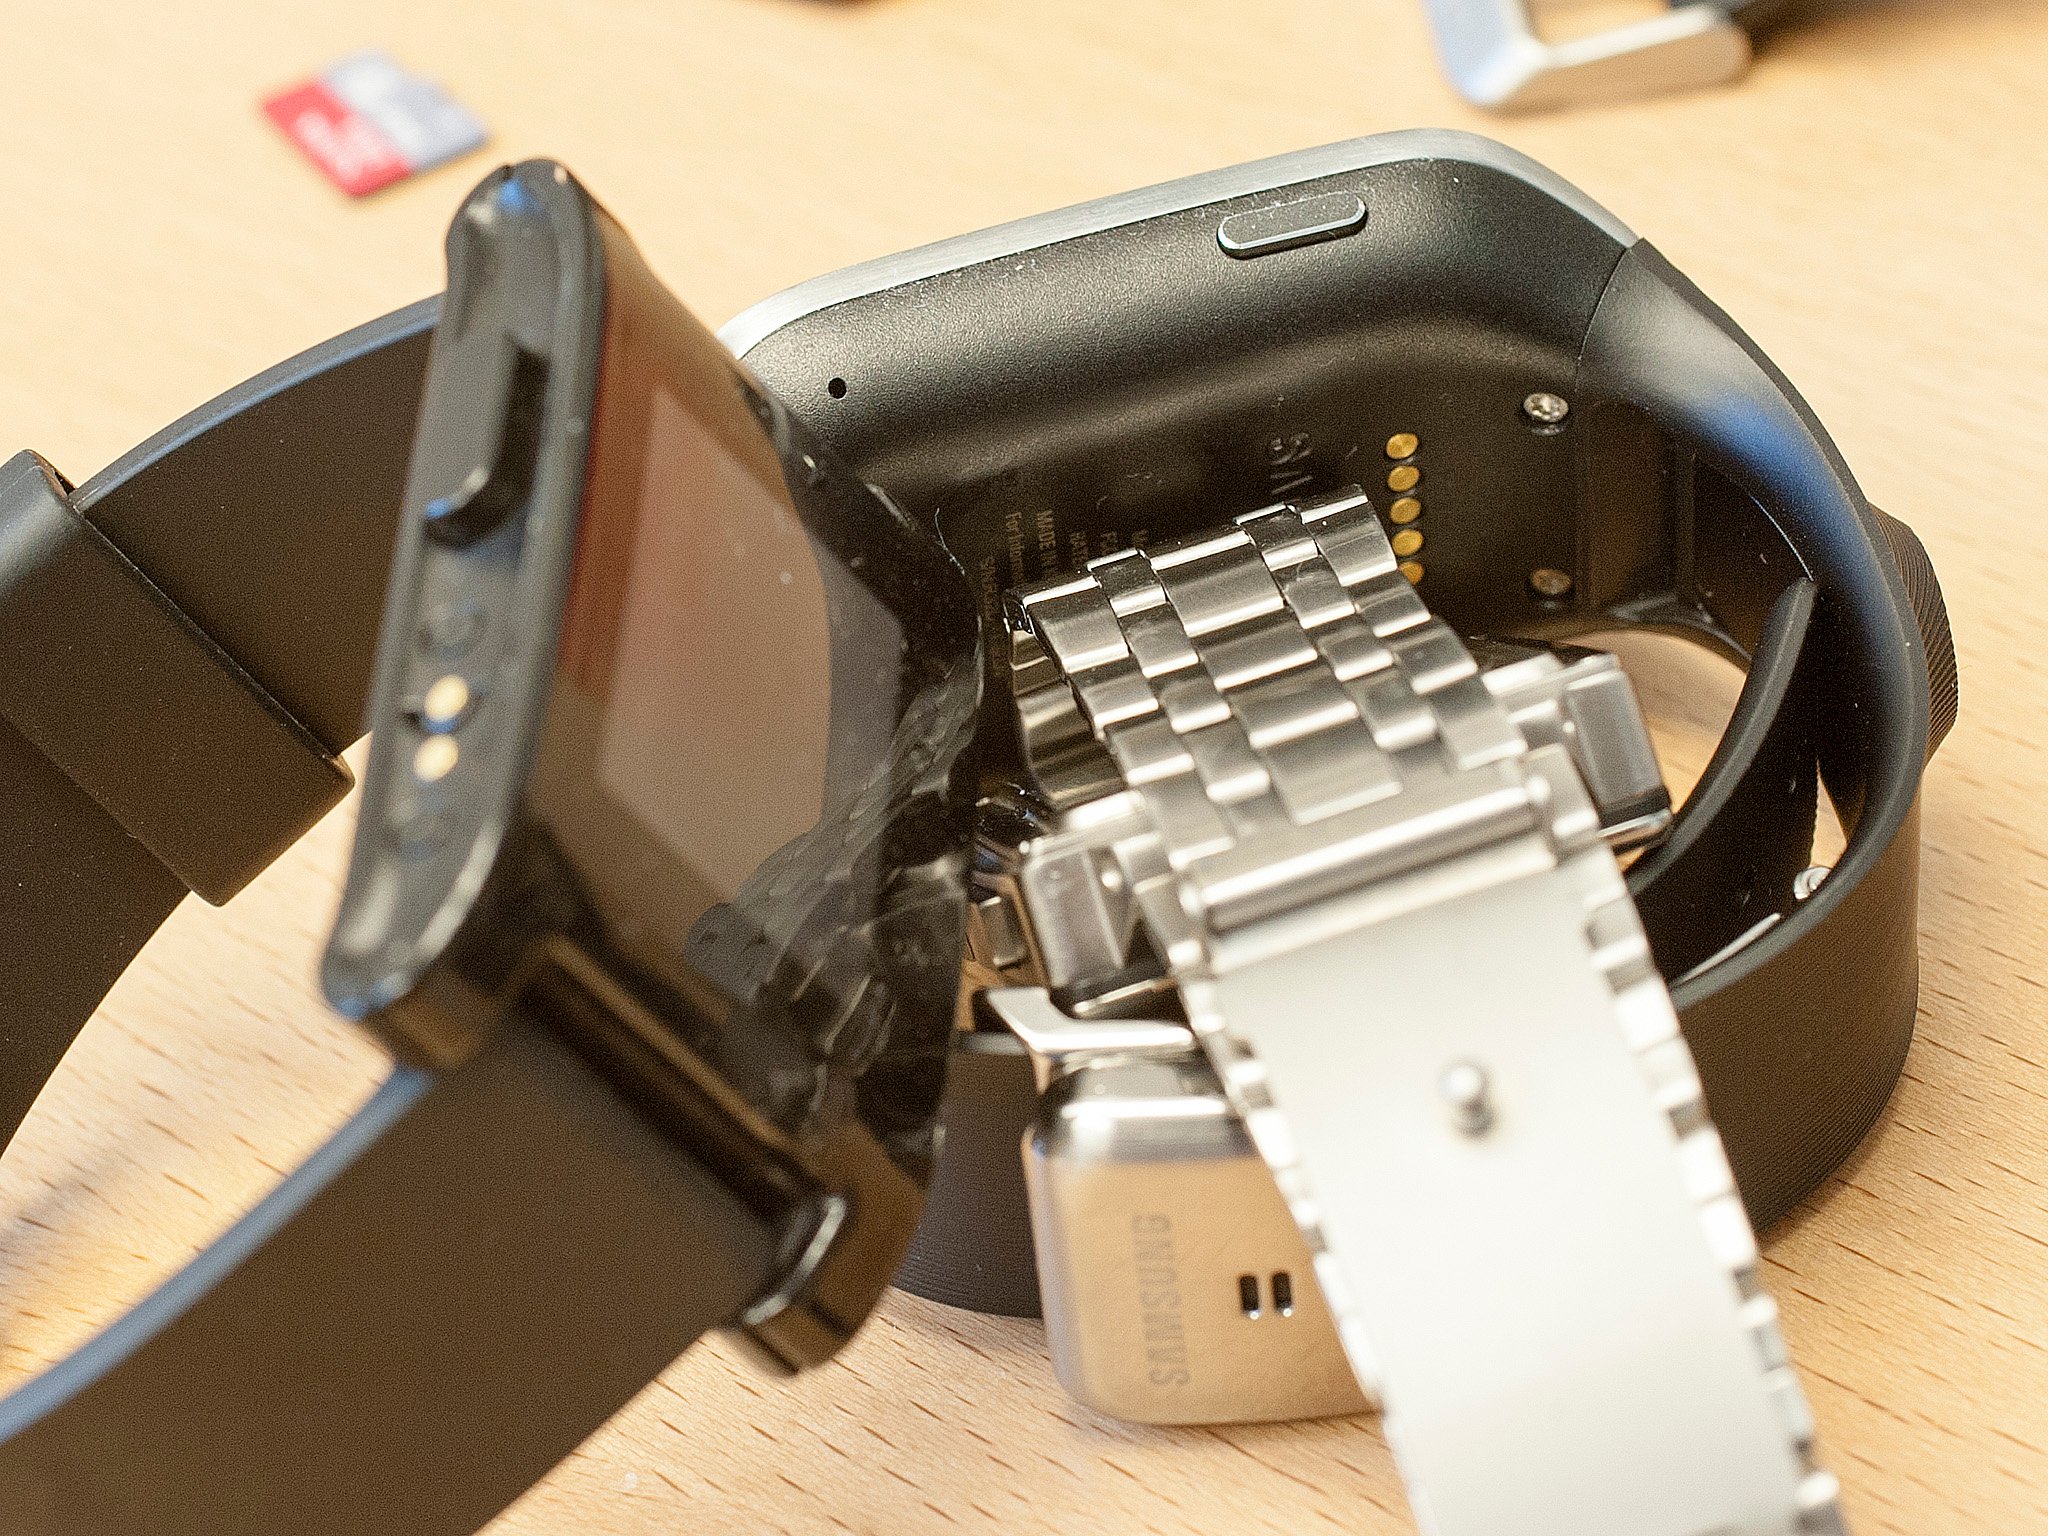 Pebble, Galaxy Gear, and smartwatch